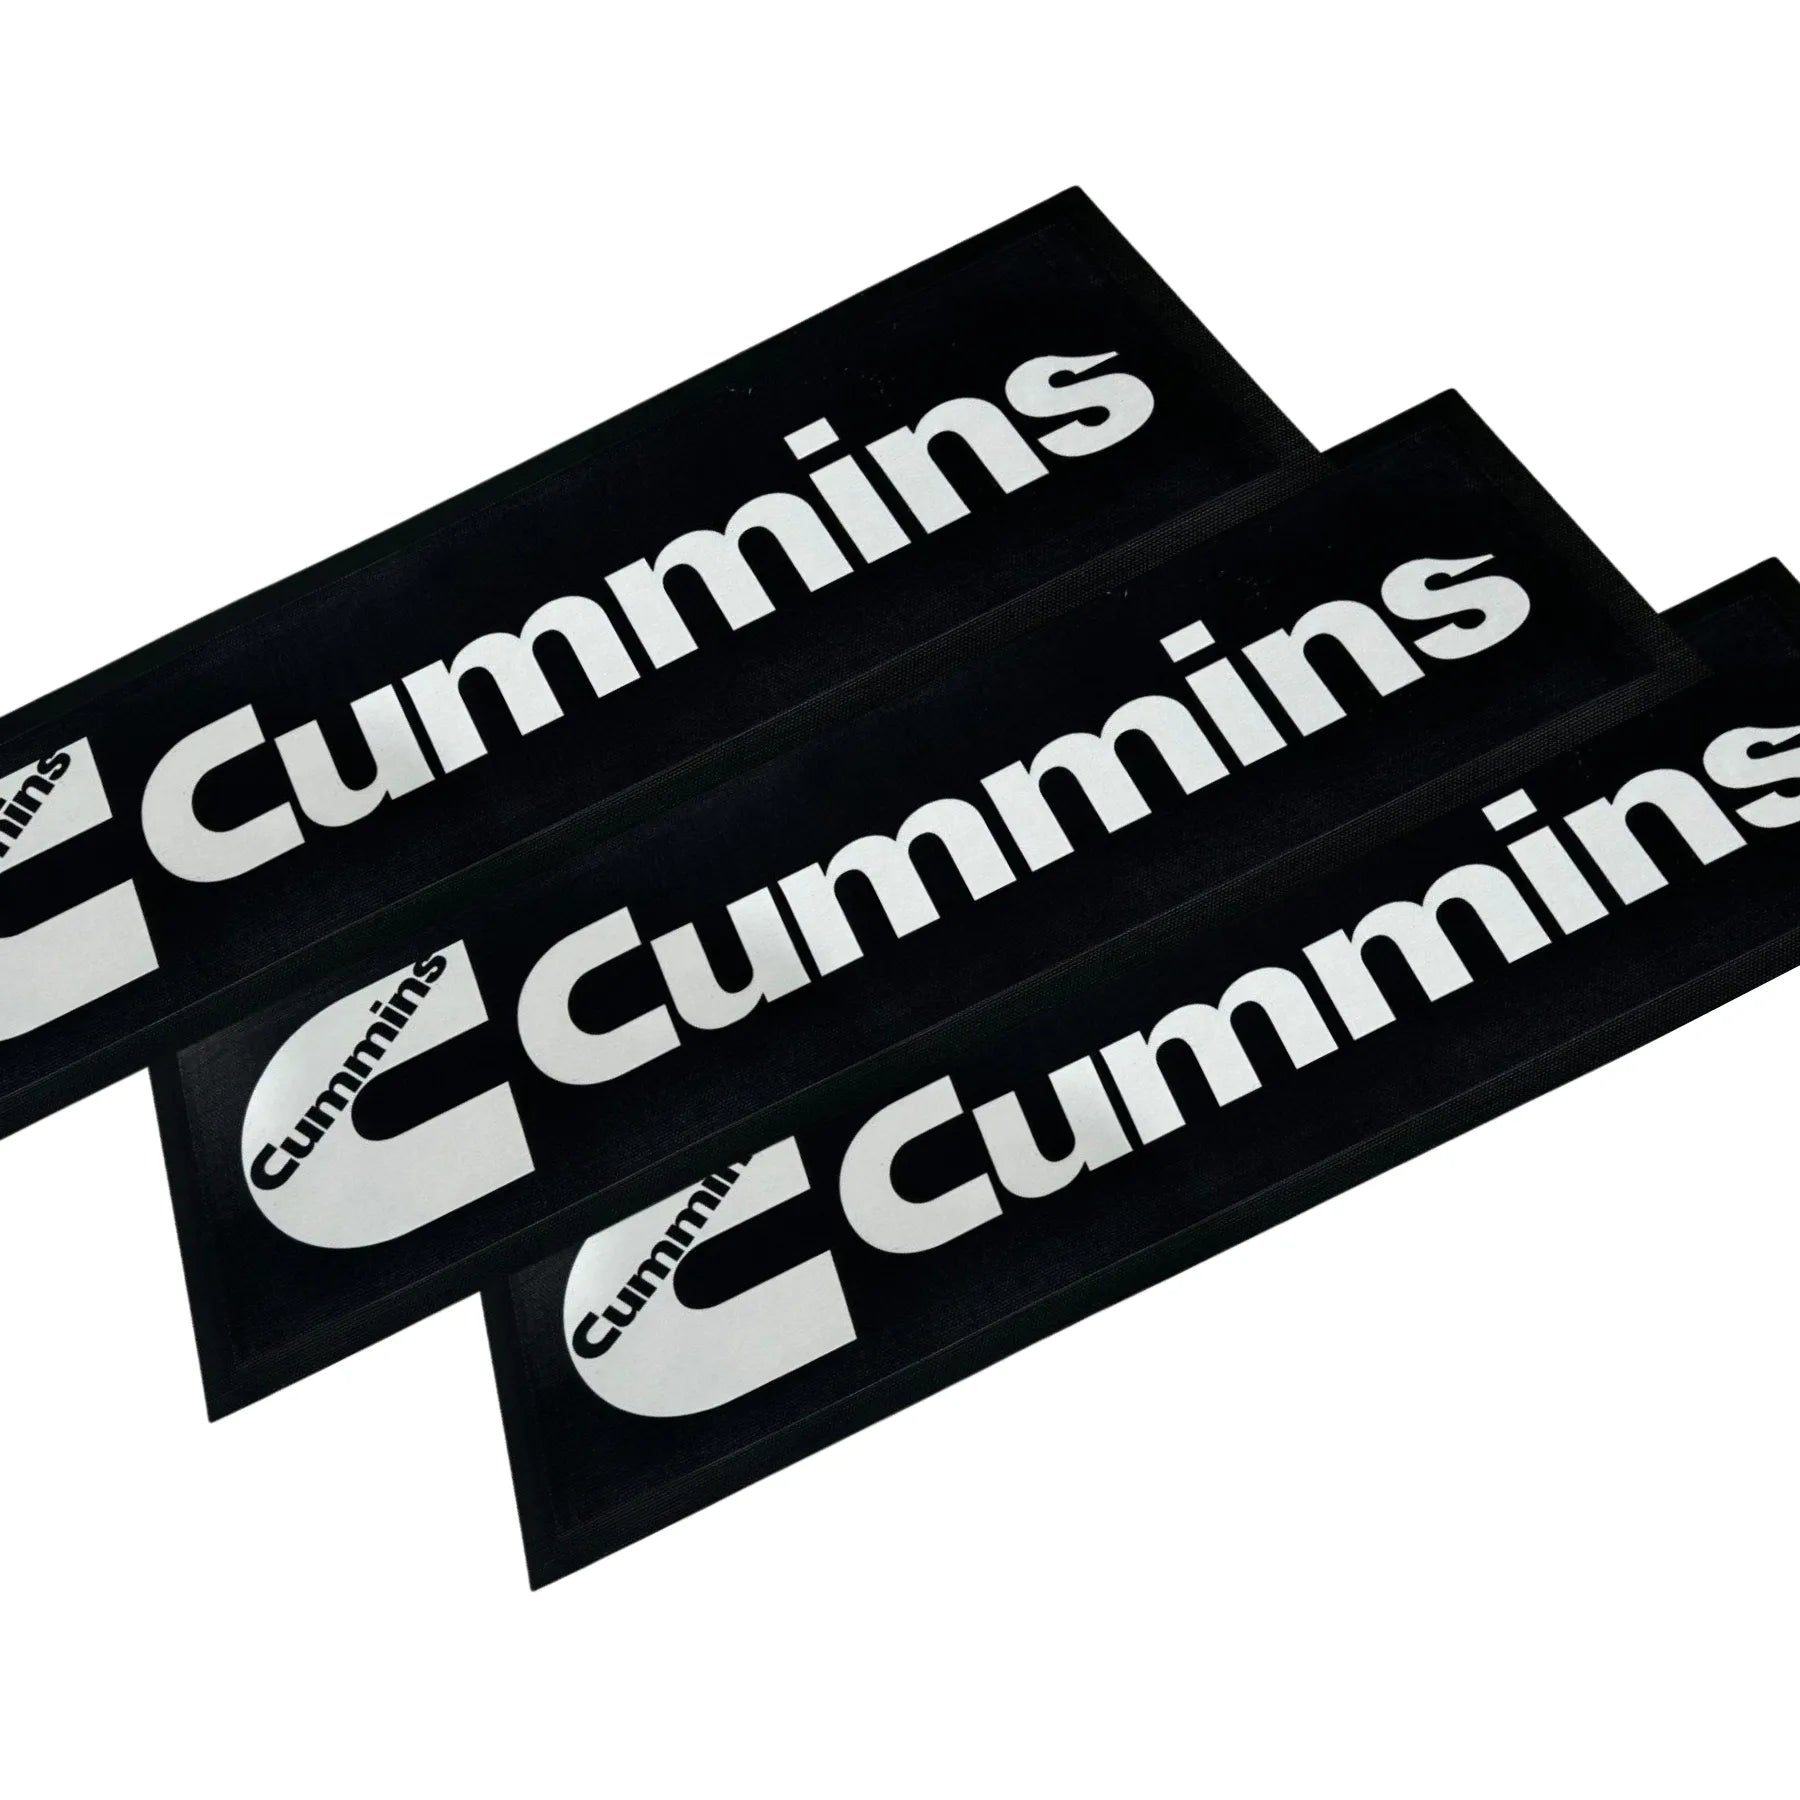 Cummins Black Premium Rubber-Backed Bar Mat Runner - KING CAVE